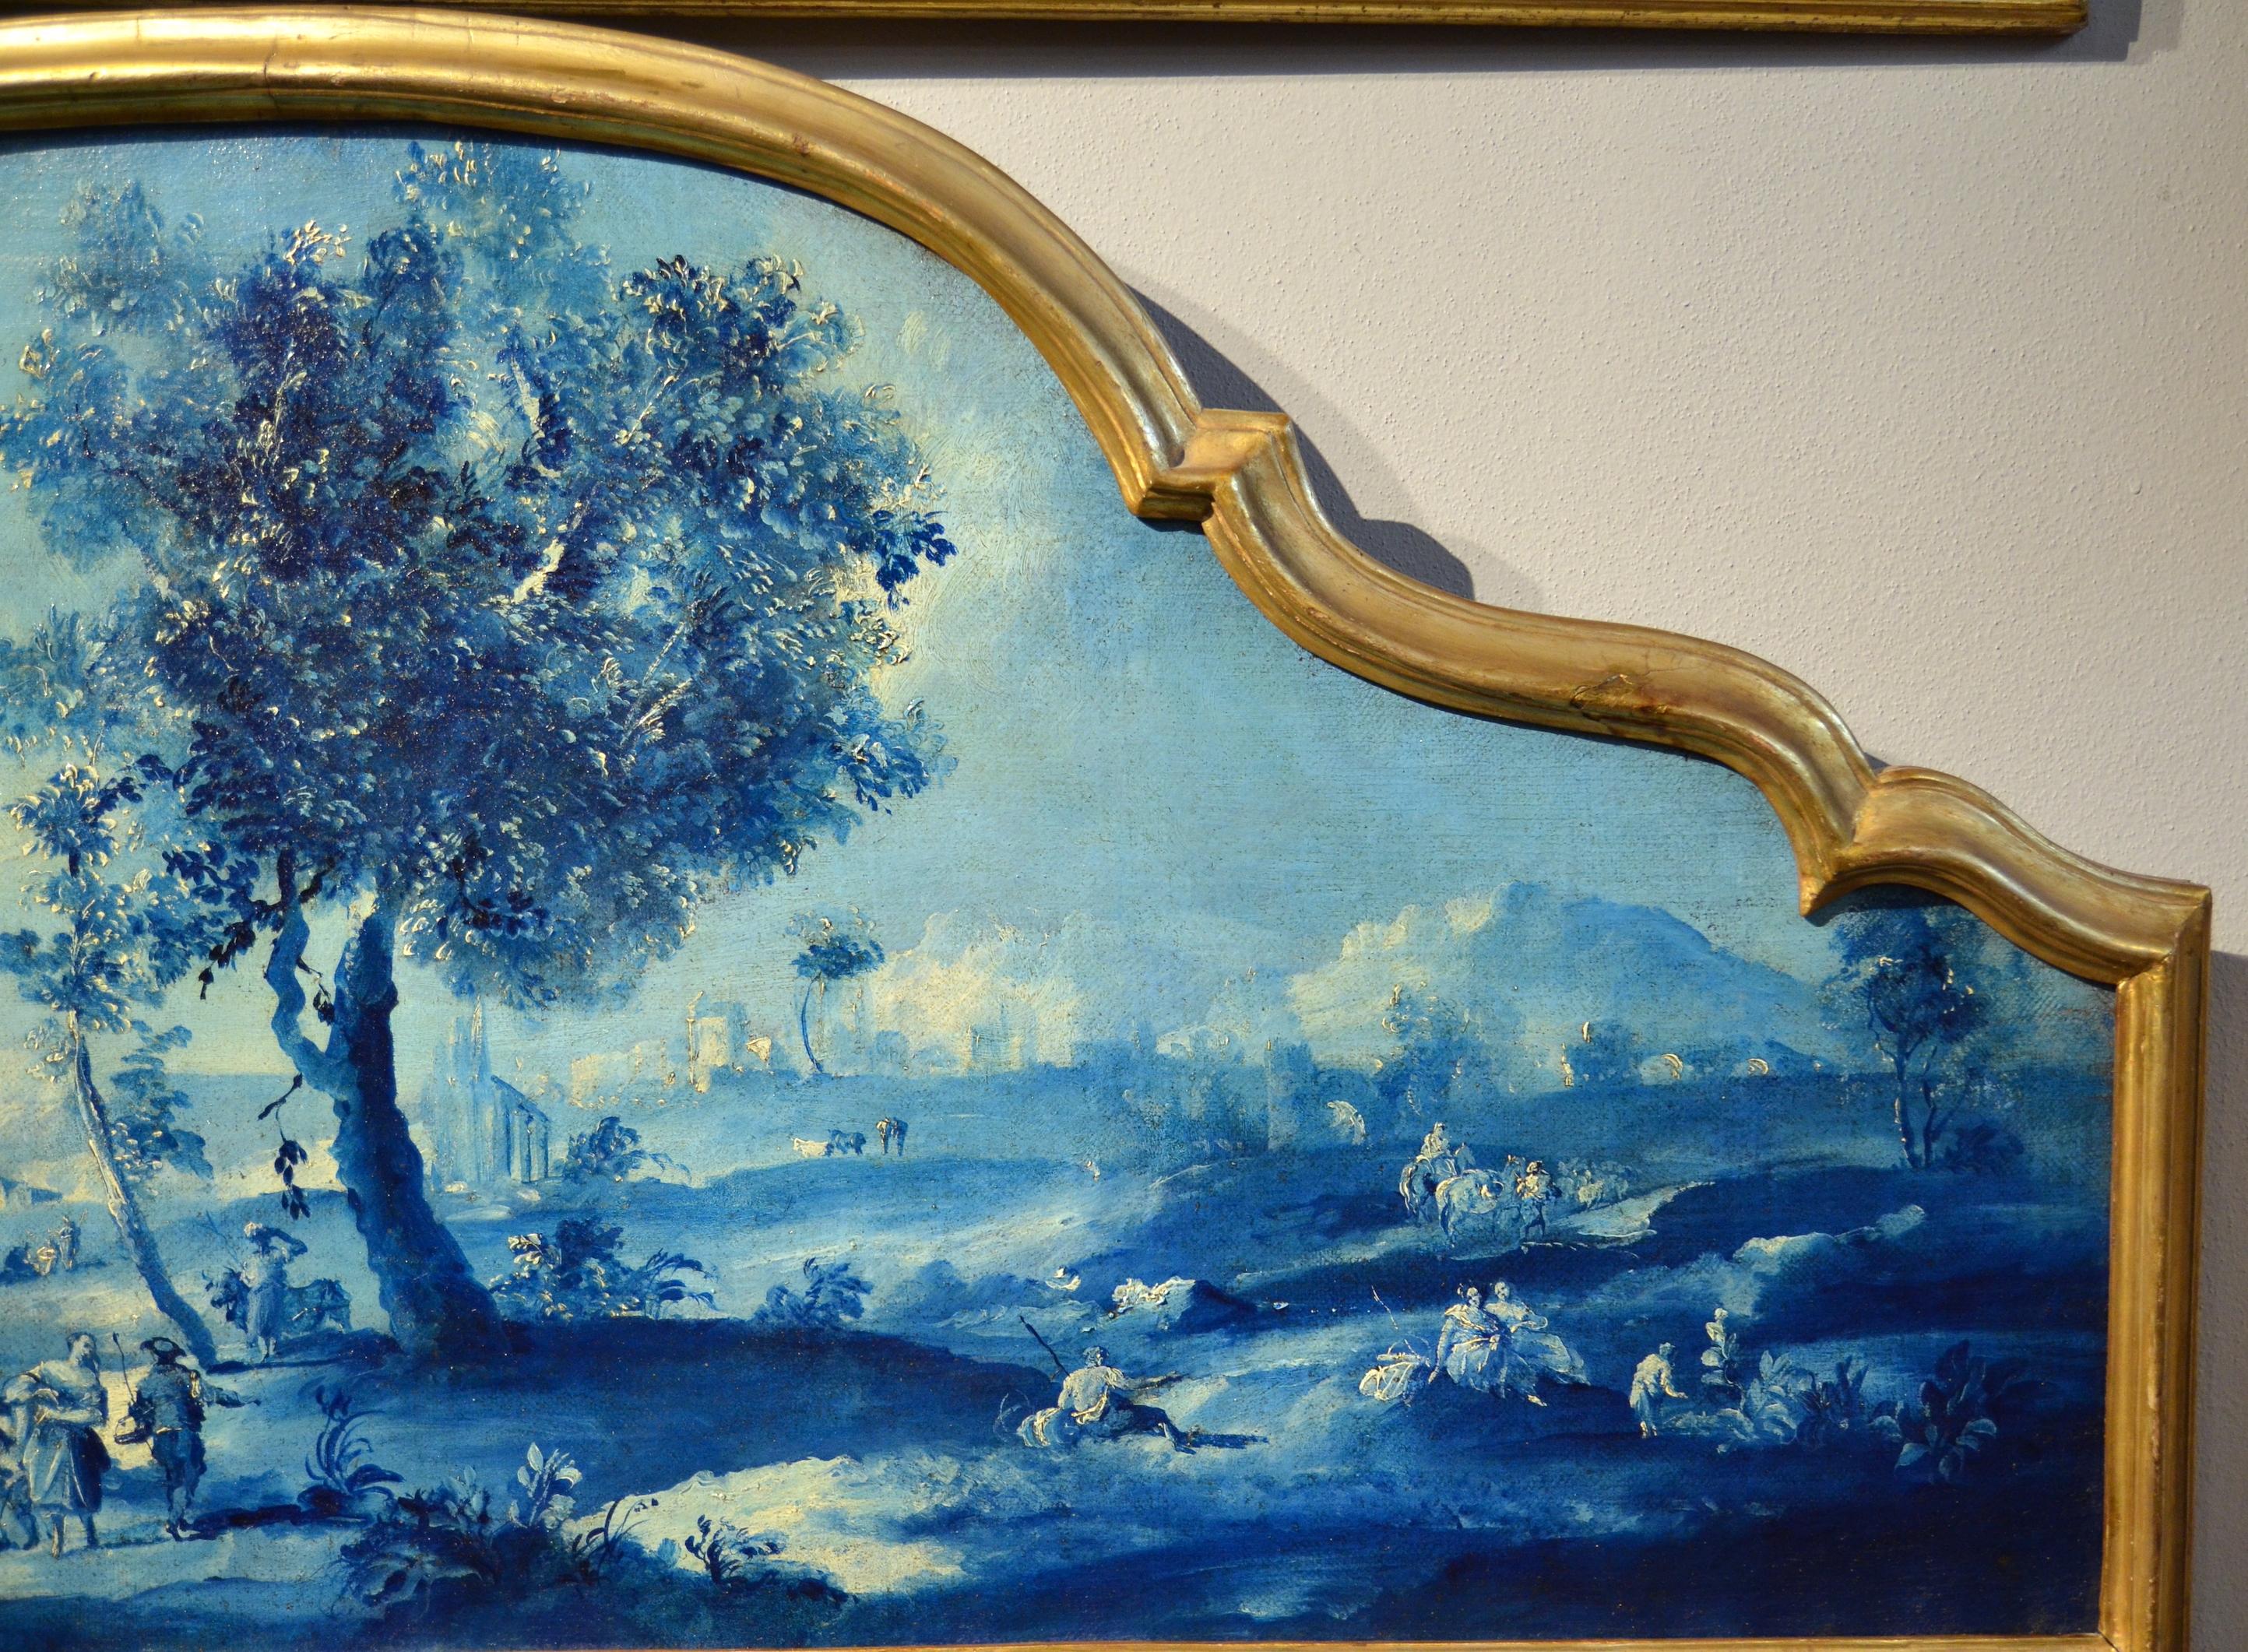 Paint Oil on canvas Pair Landscape Wood See Lake Venezia Italy Baroque Ricci Art 3